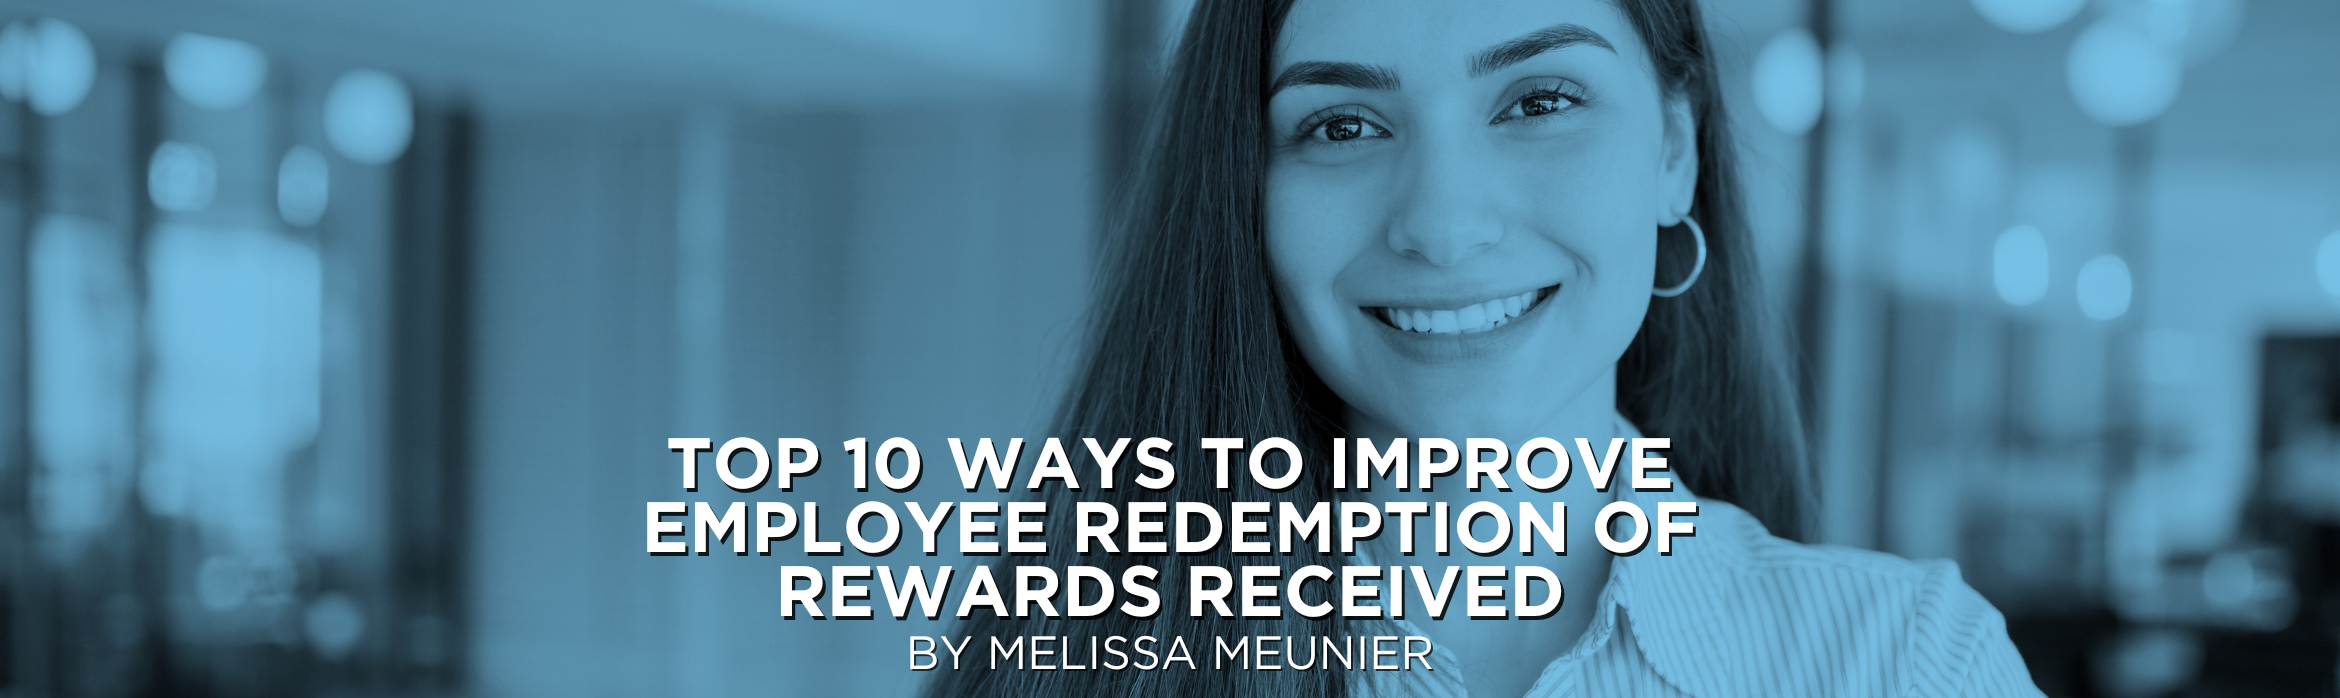 Top 10 Ways to Improve Employee Redemption of Rewards Received